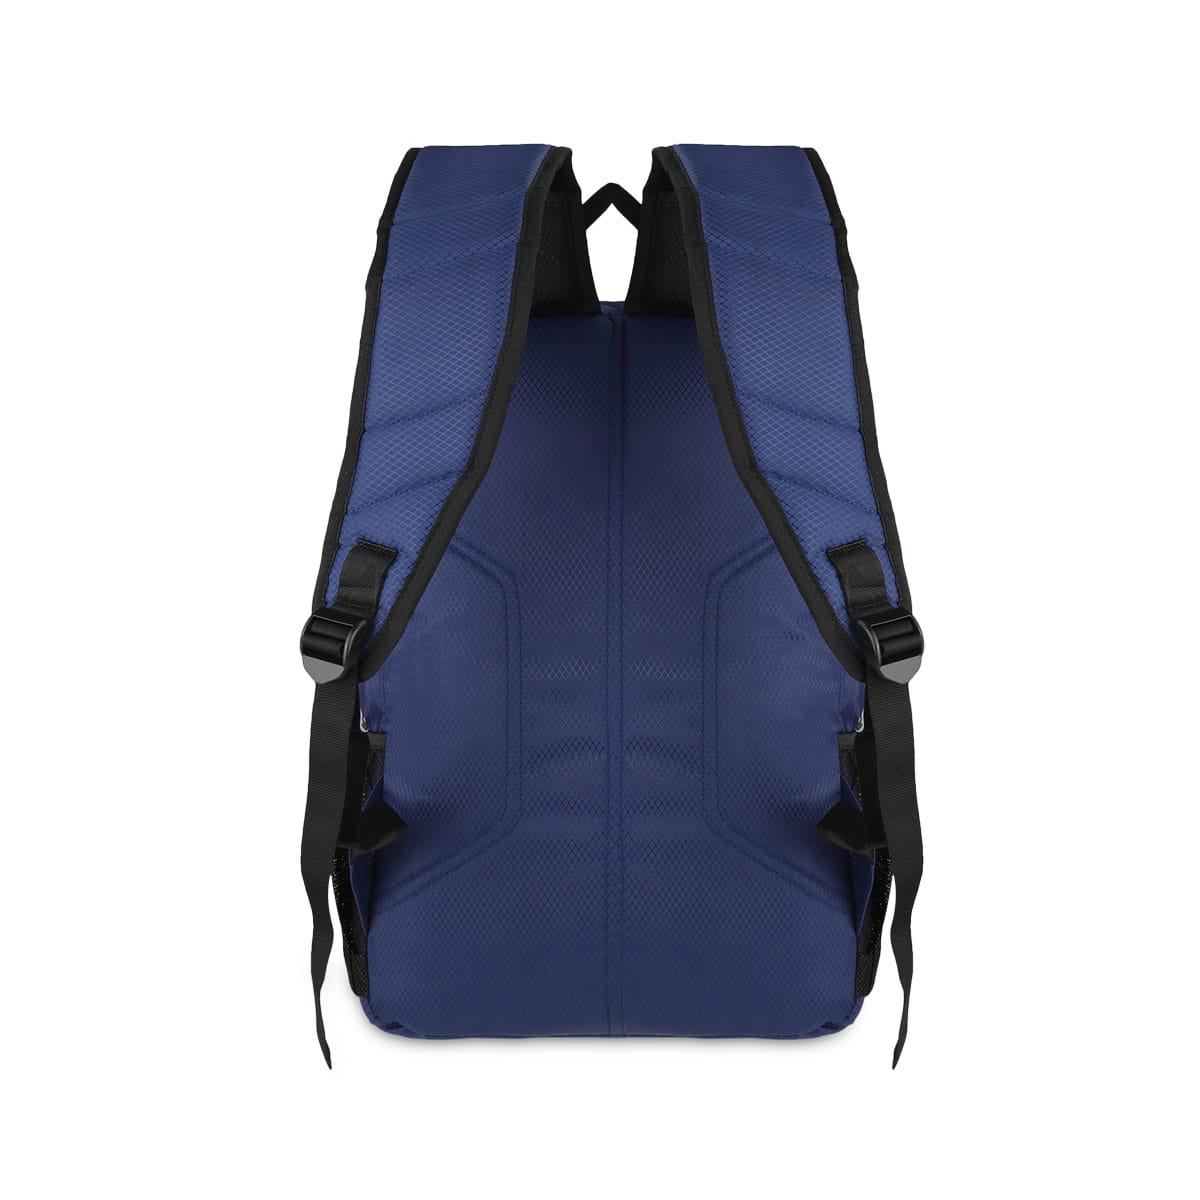 Navy-Blue | Protecta Bolt Laptop Backpack-3